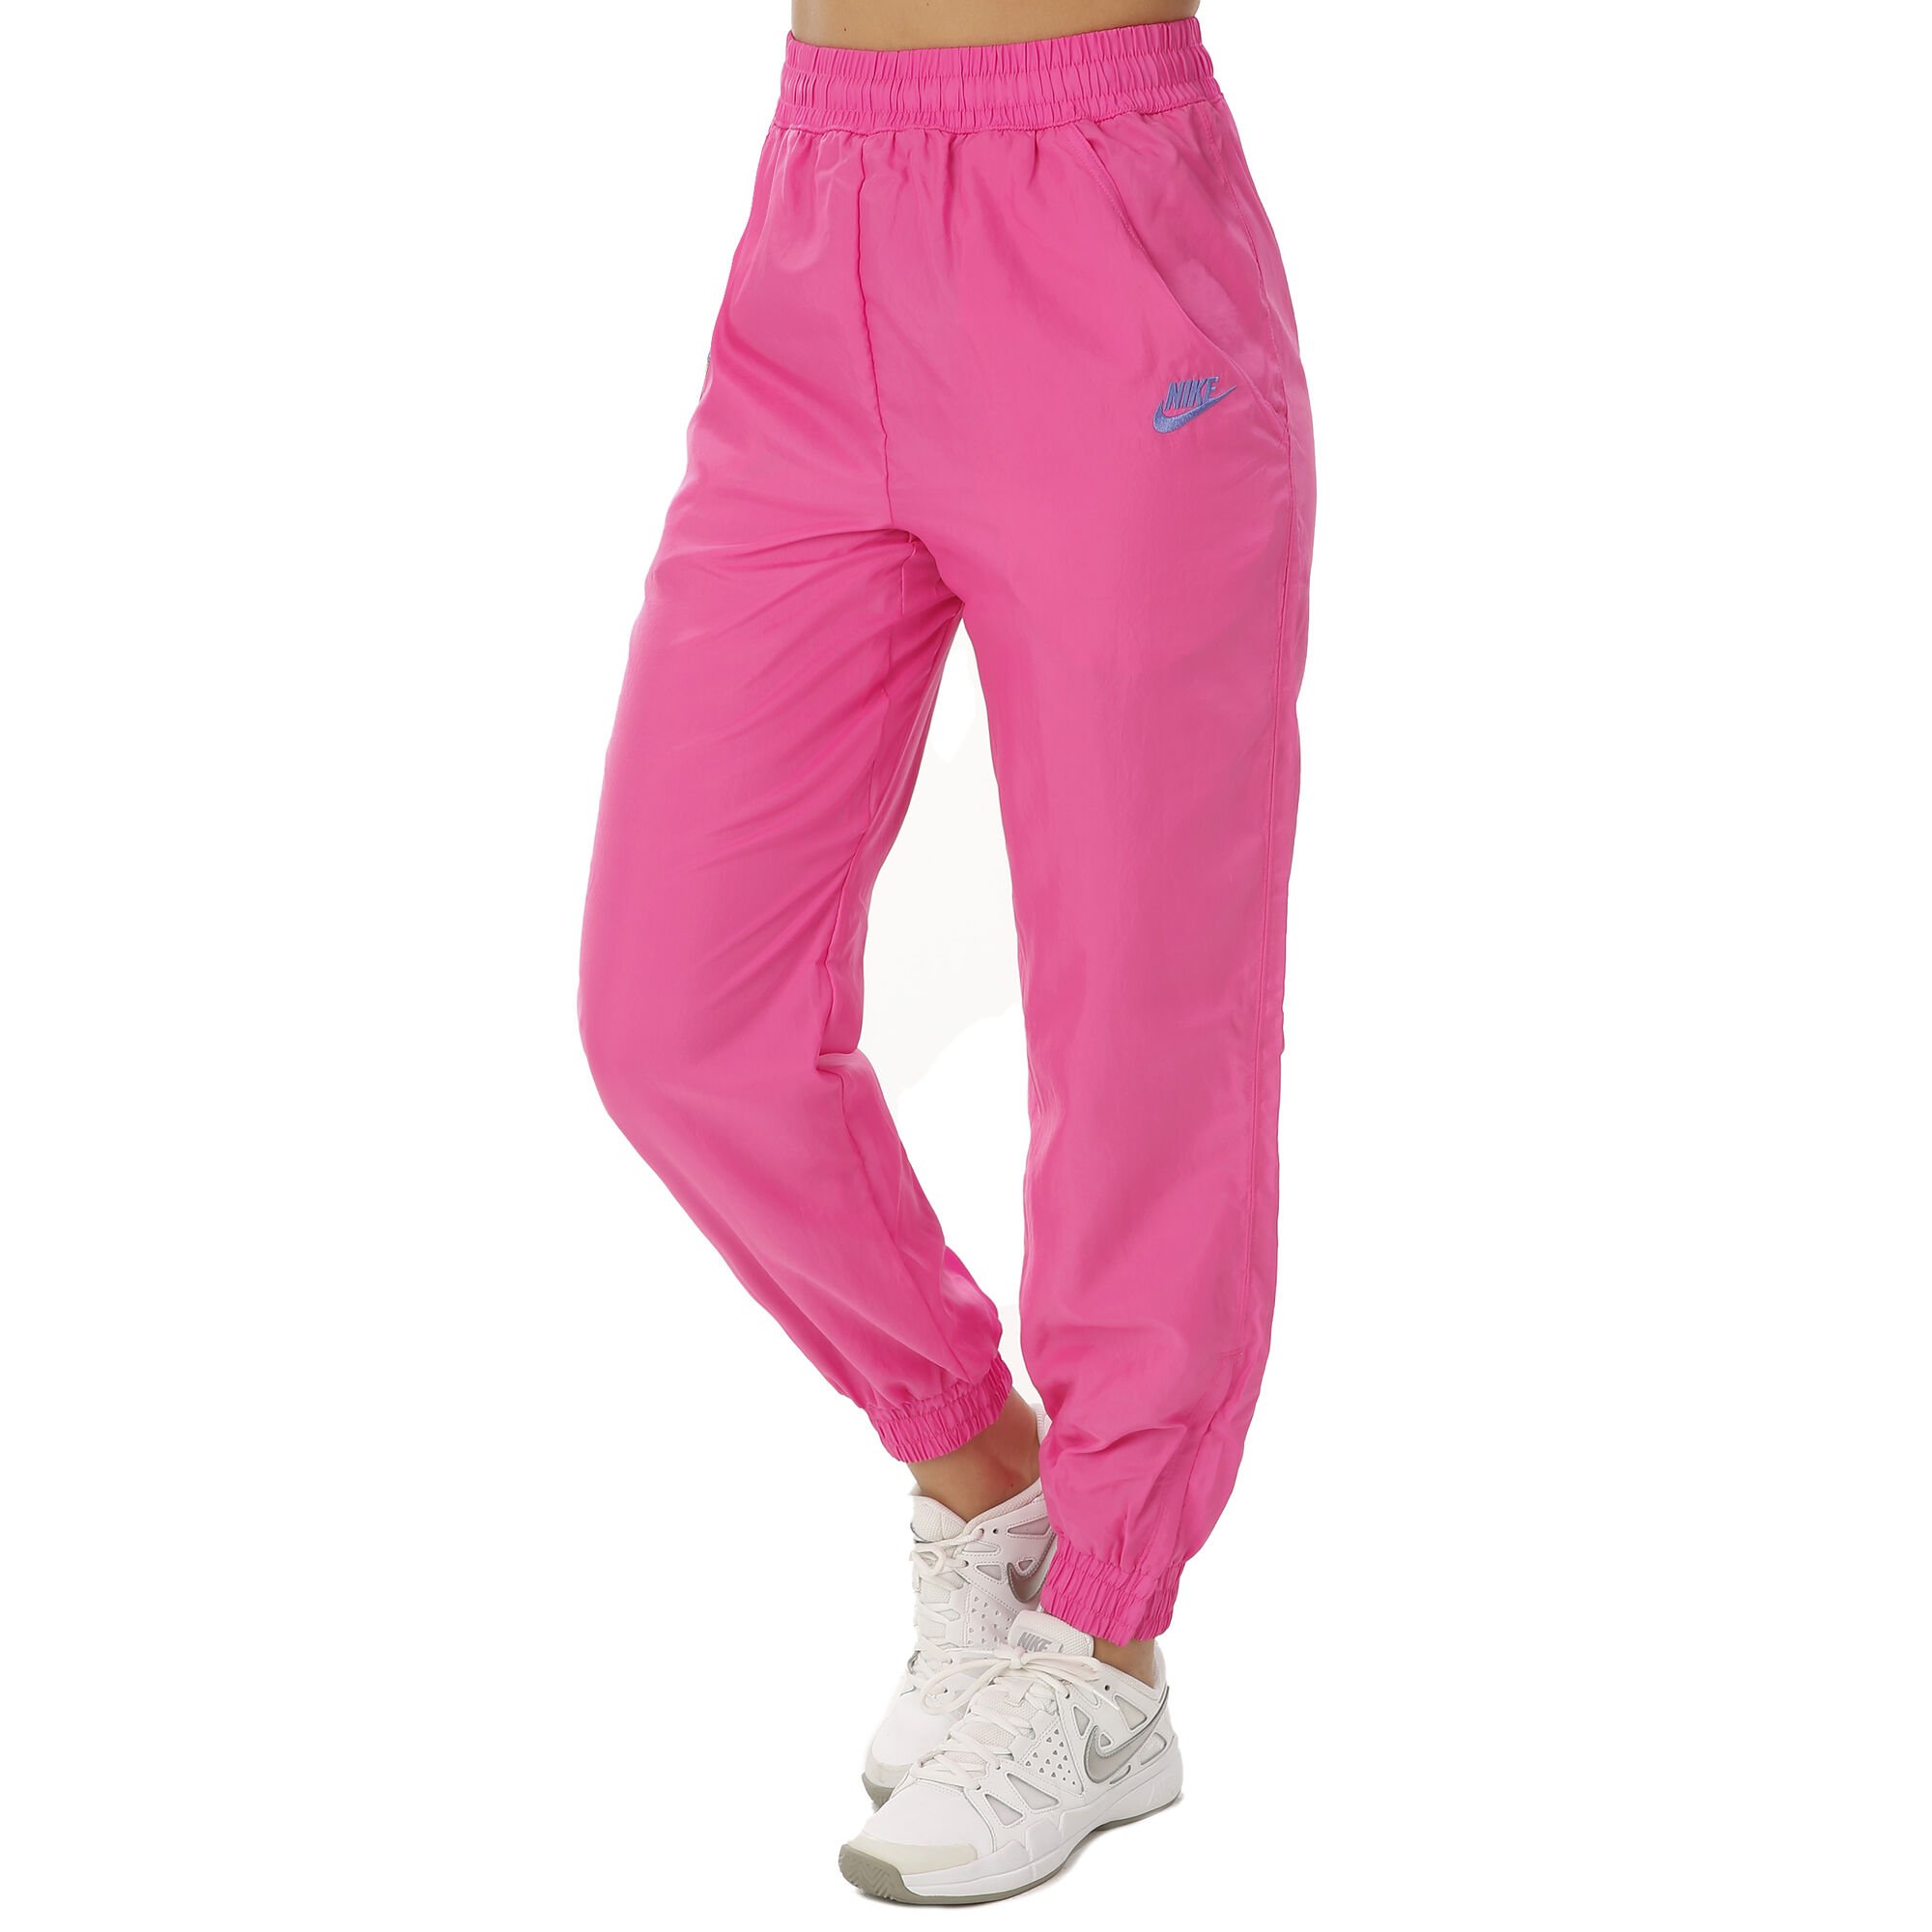 Court Training Pants Women - Neon Pink, Light Blue